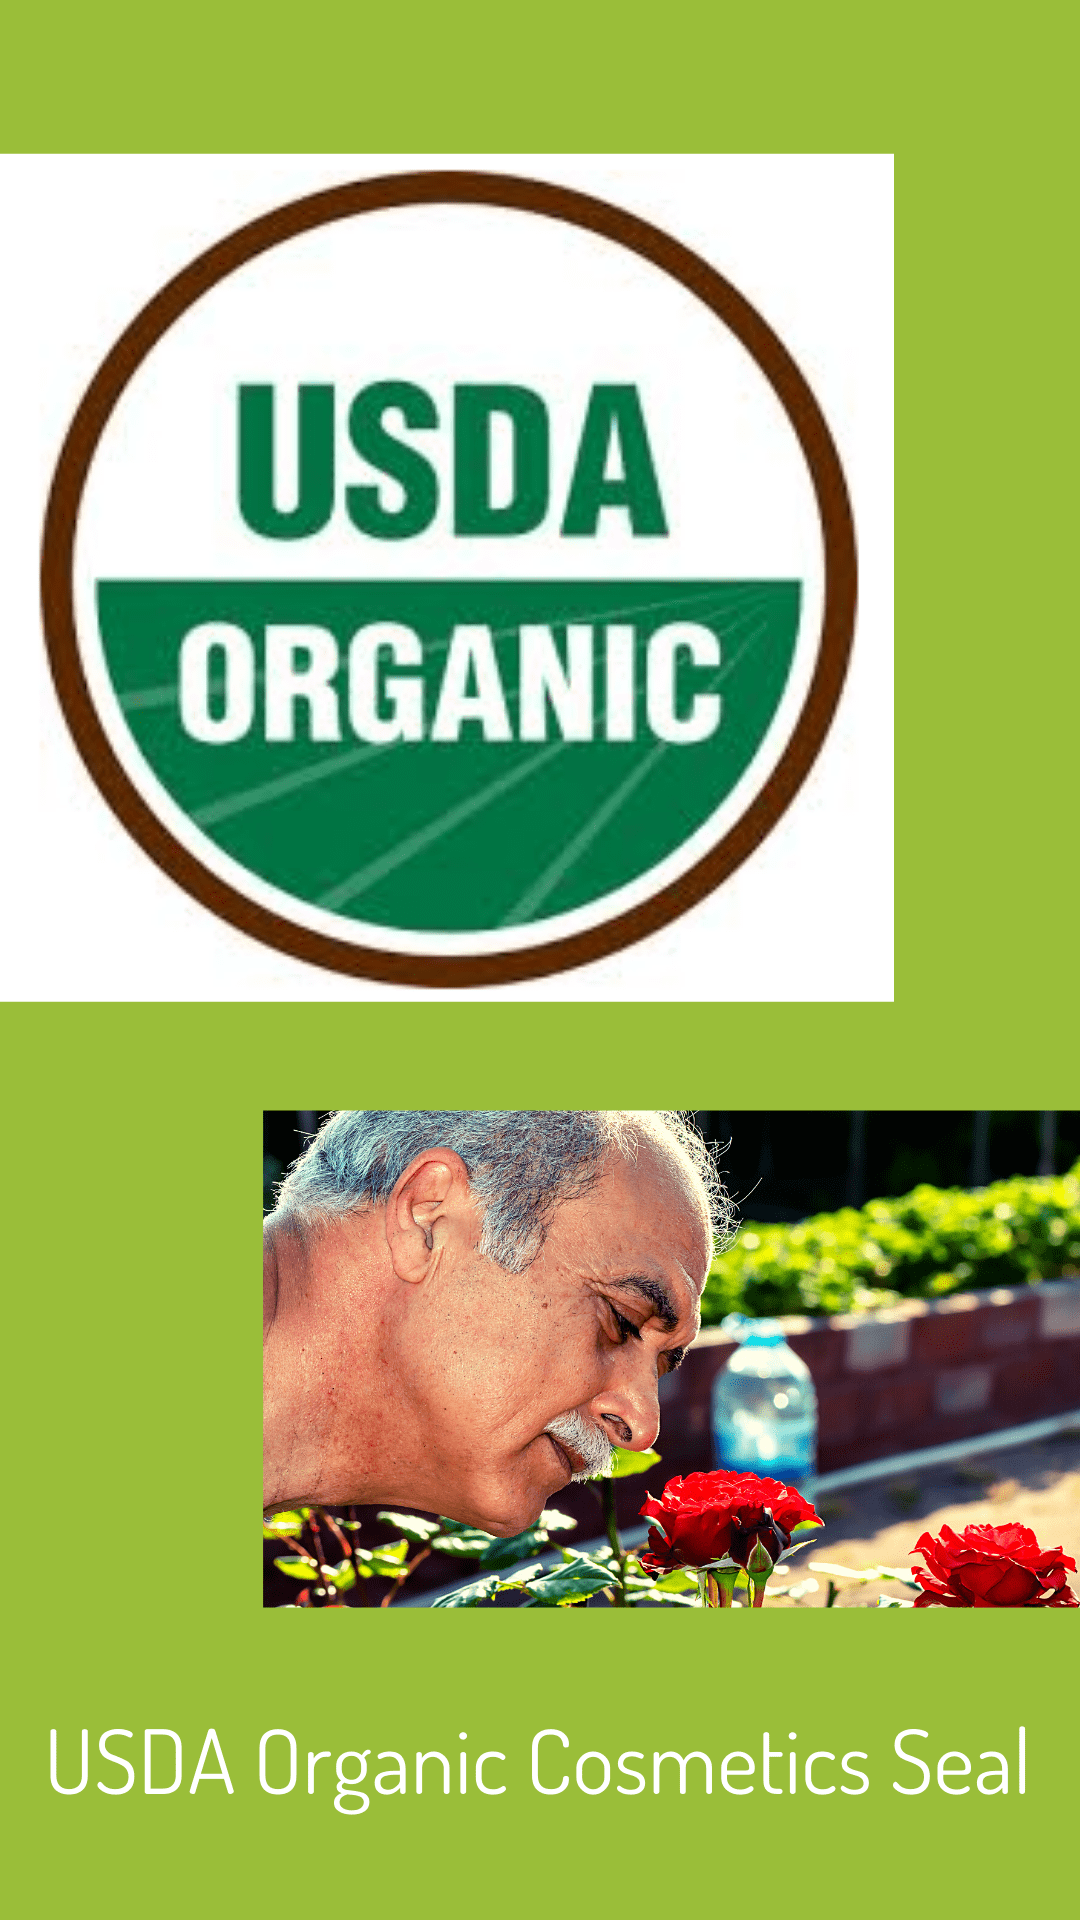 USDA Organic Siegel mit Mann der an Rose riecht